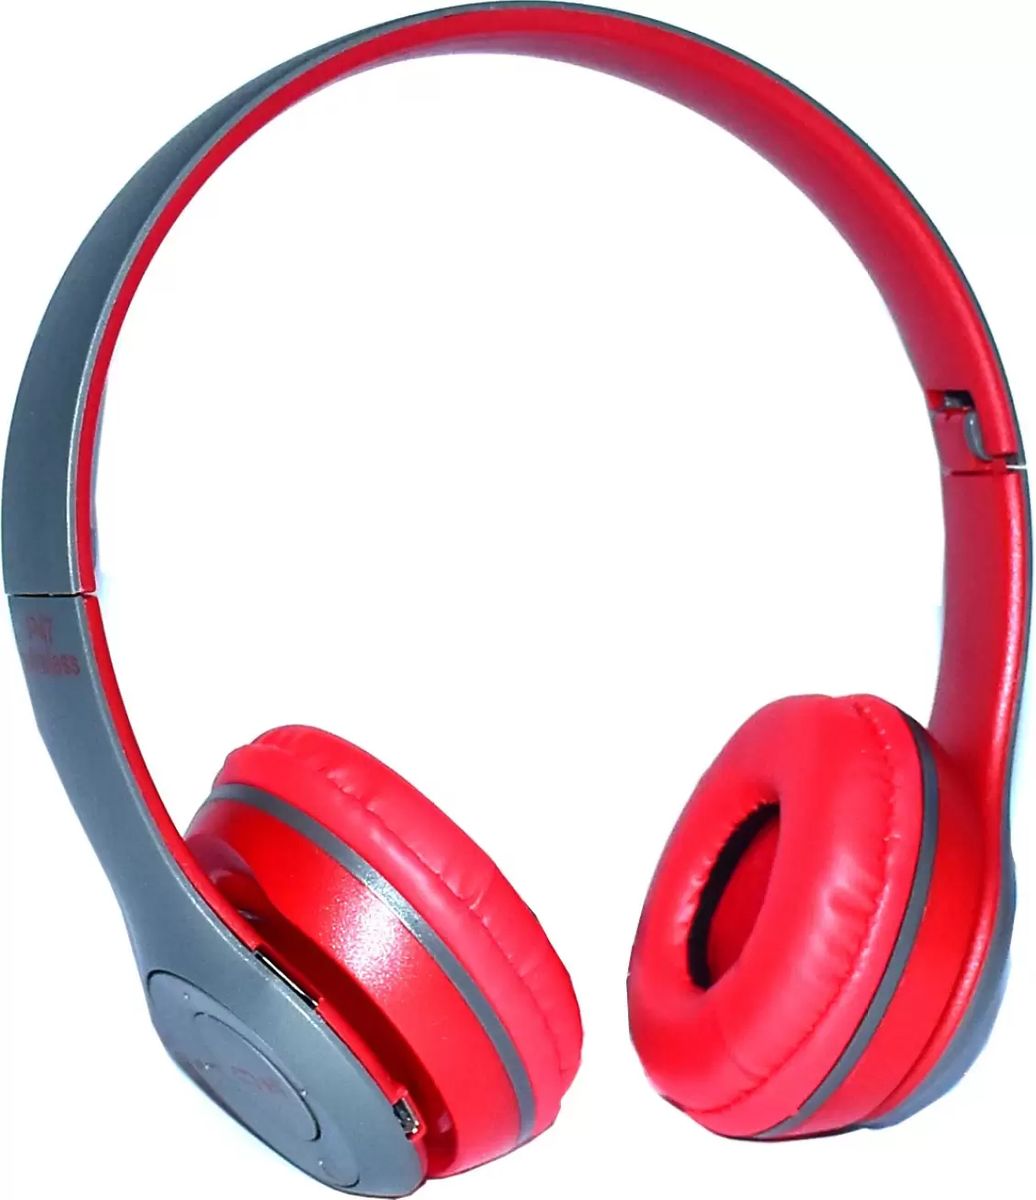 Boat Rockerz 530 Wireless Headset Best Price In India 21 Specs Review Smartprix